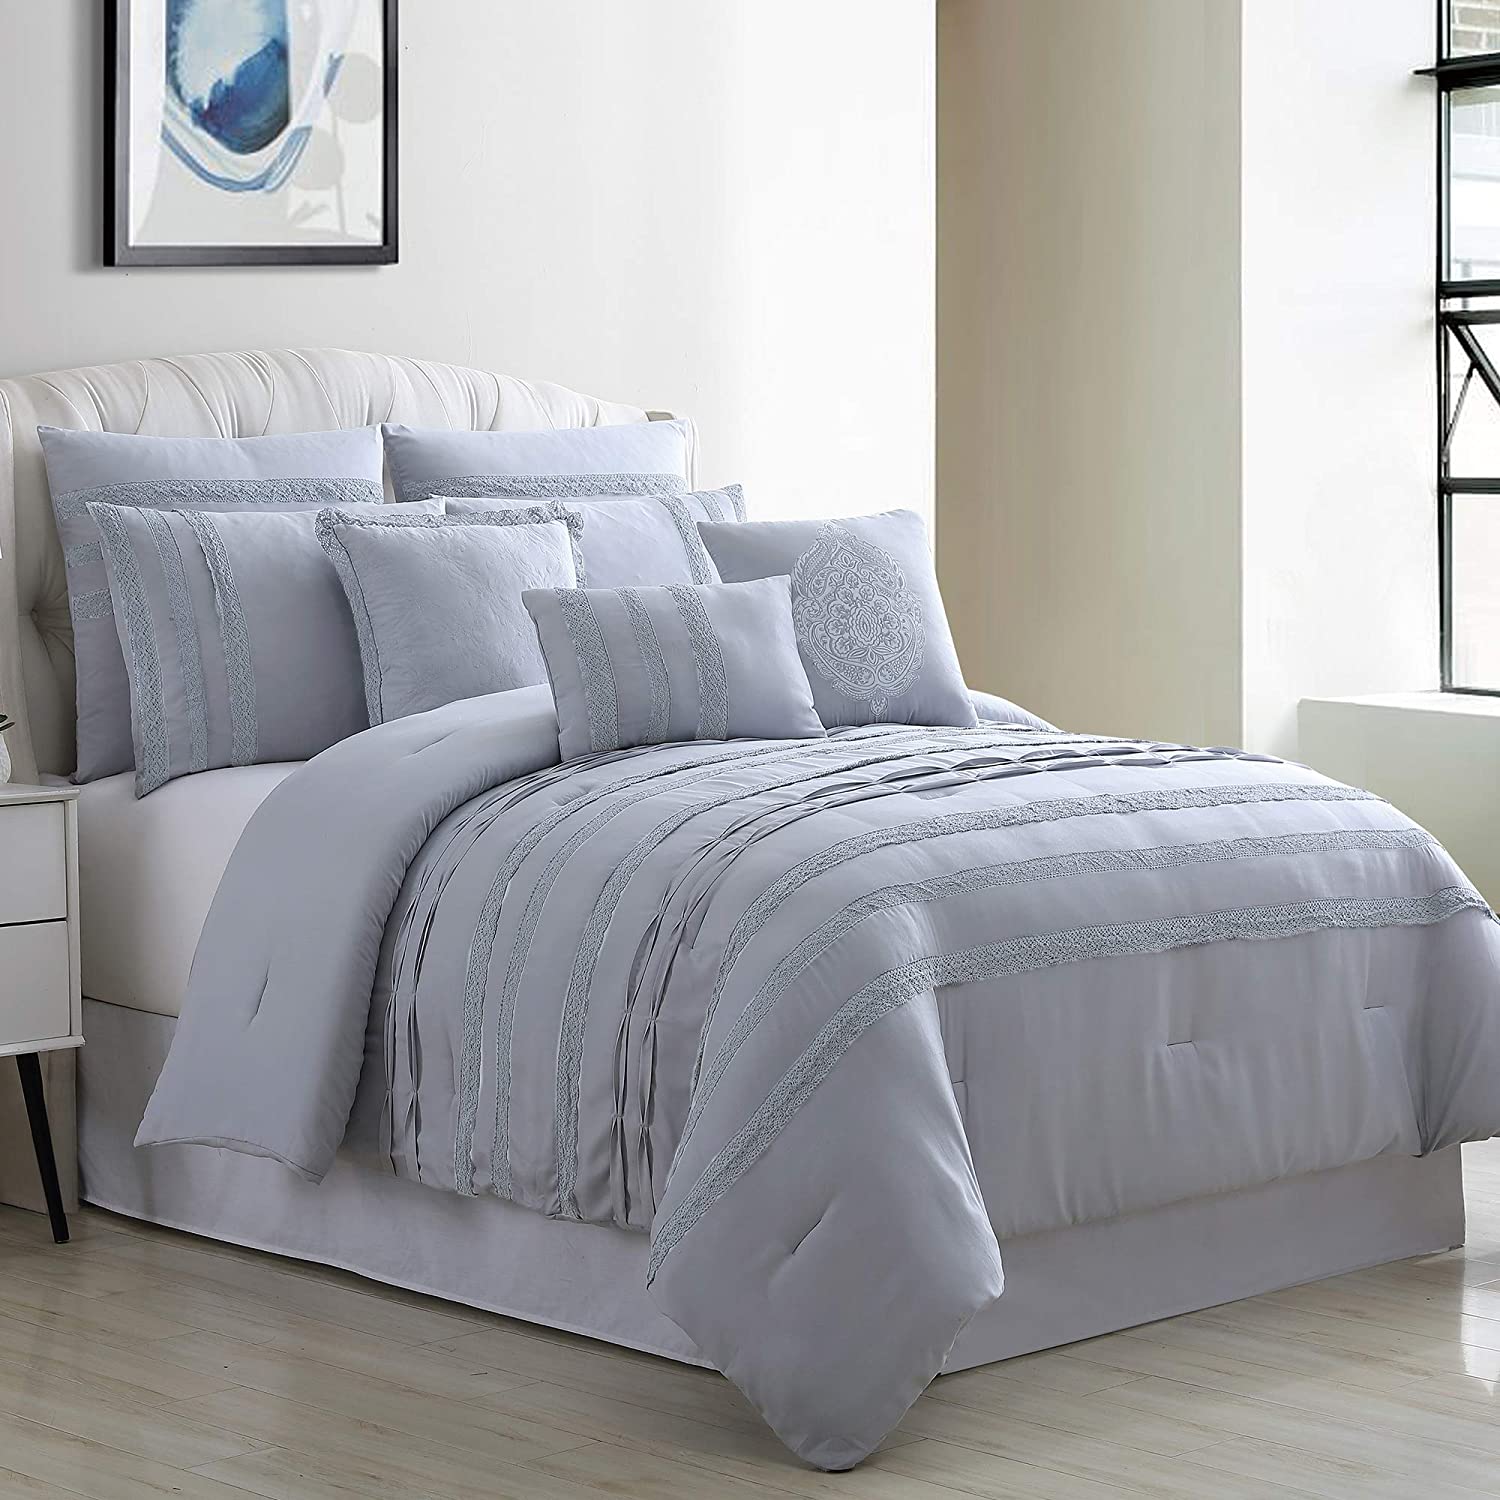 Details about   Amrapur Overseas Kira 8-Piece Embellished Comforter Set Queen White/Blue 